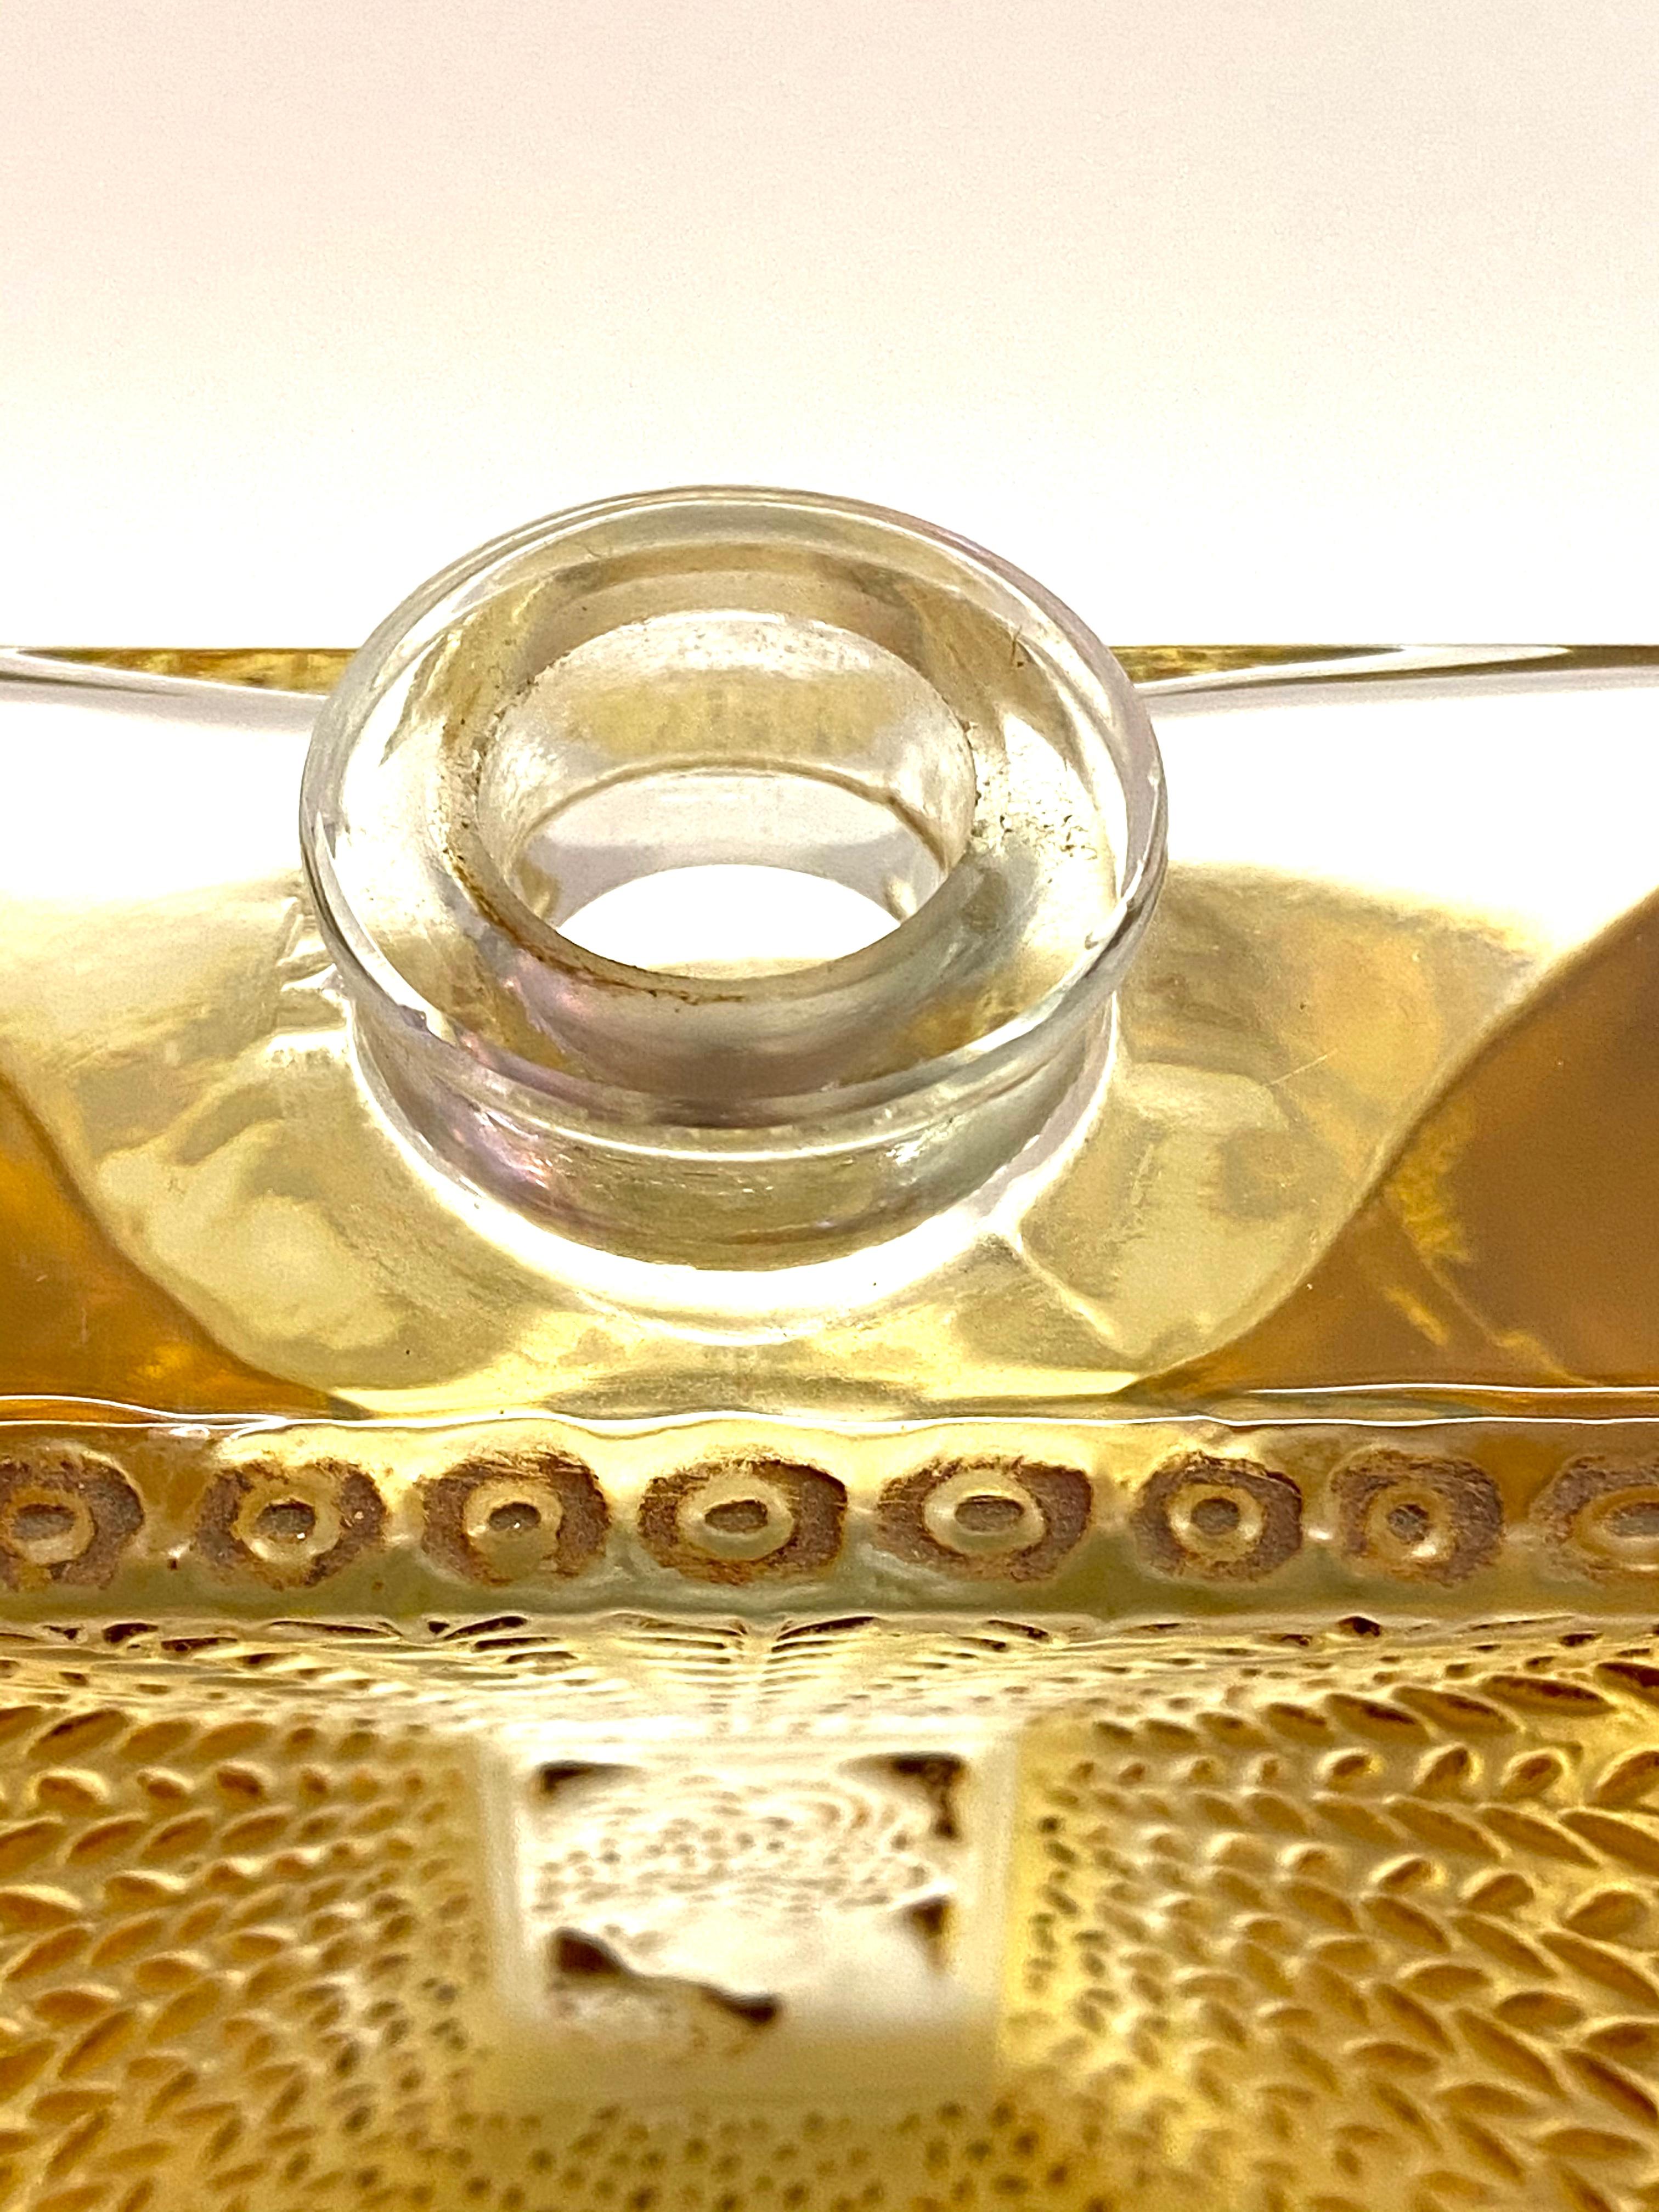 French 1925 Rene Lalique La Belle Saison Houbigant Perfume Bottle Sepia Stained Glass